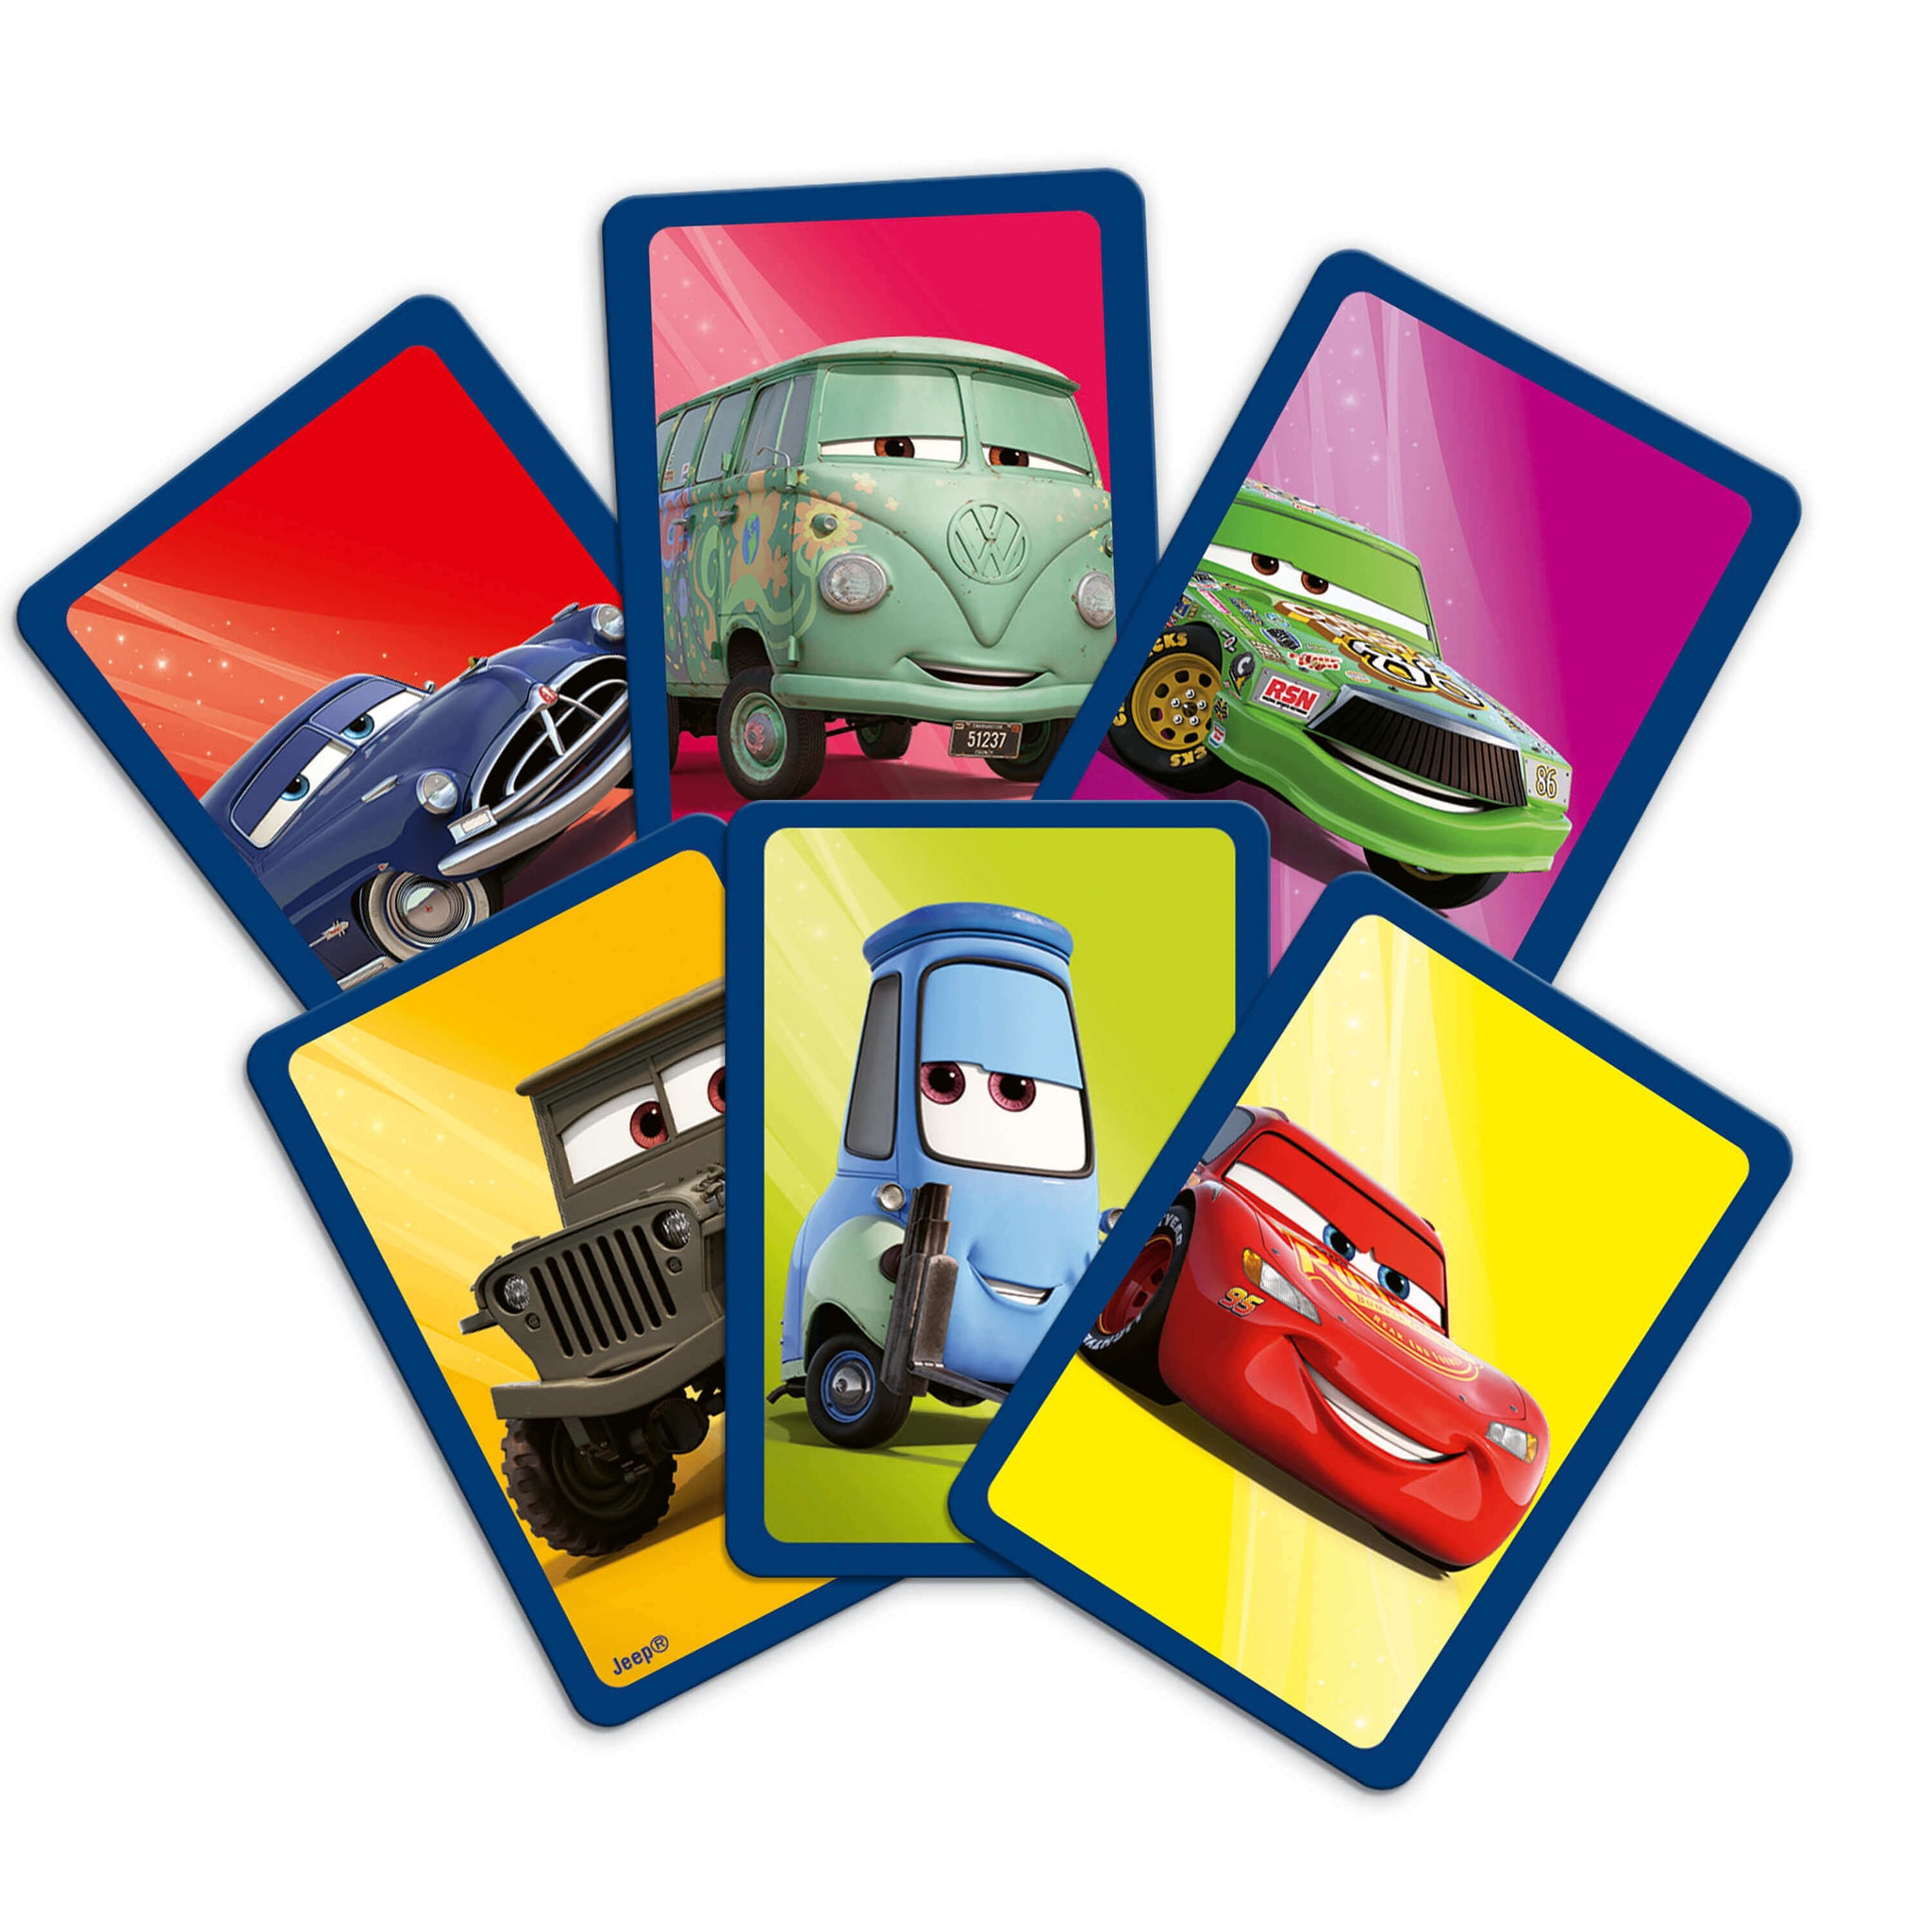 Pixar Cars Top Trumps Match - The Crazy Cube Game